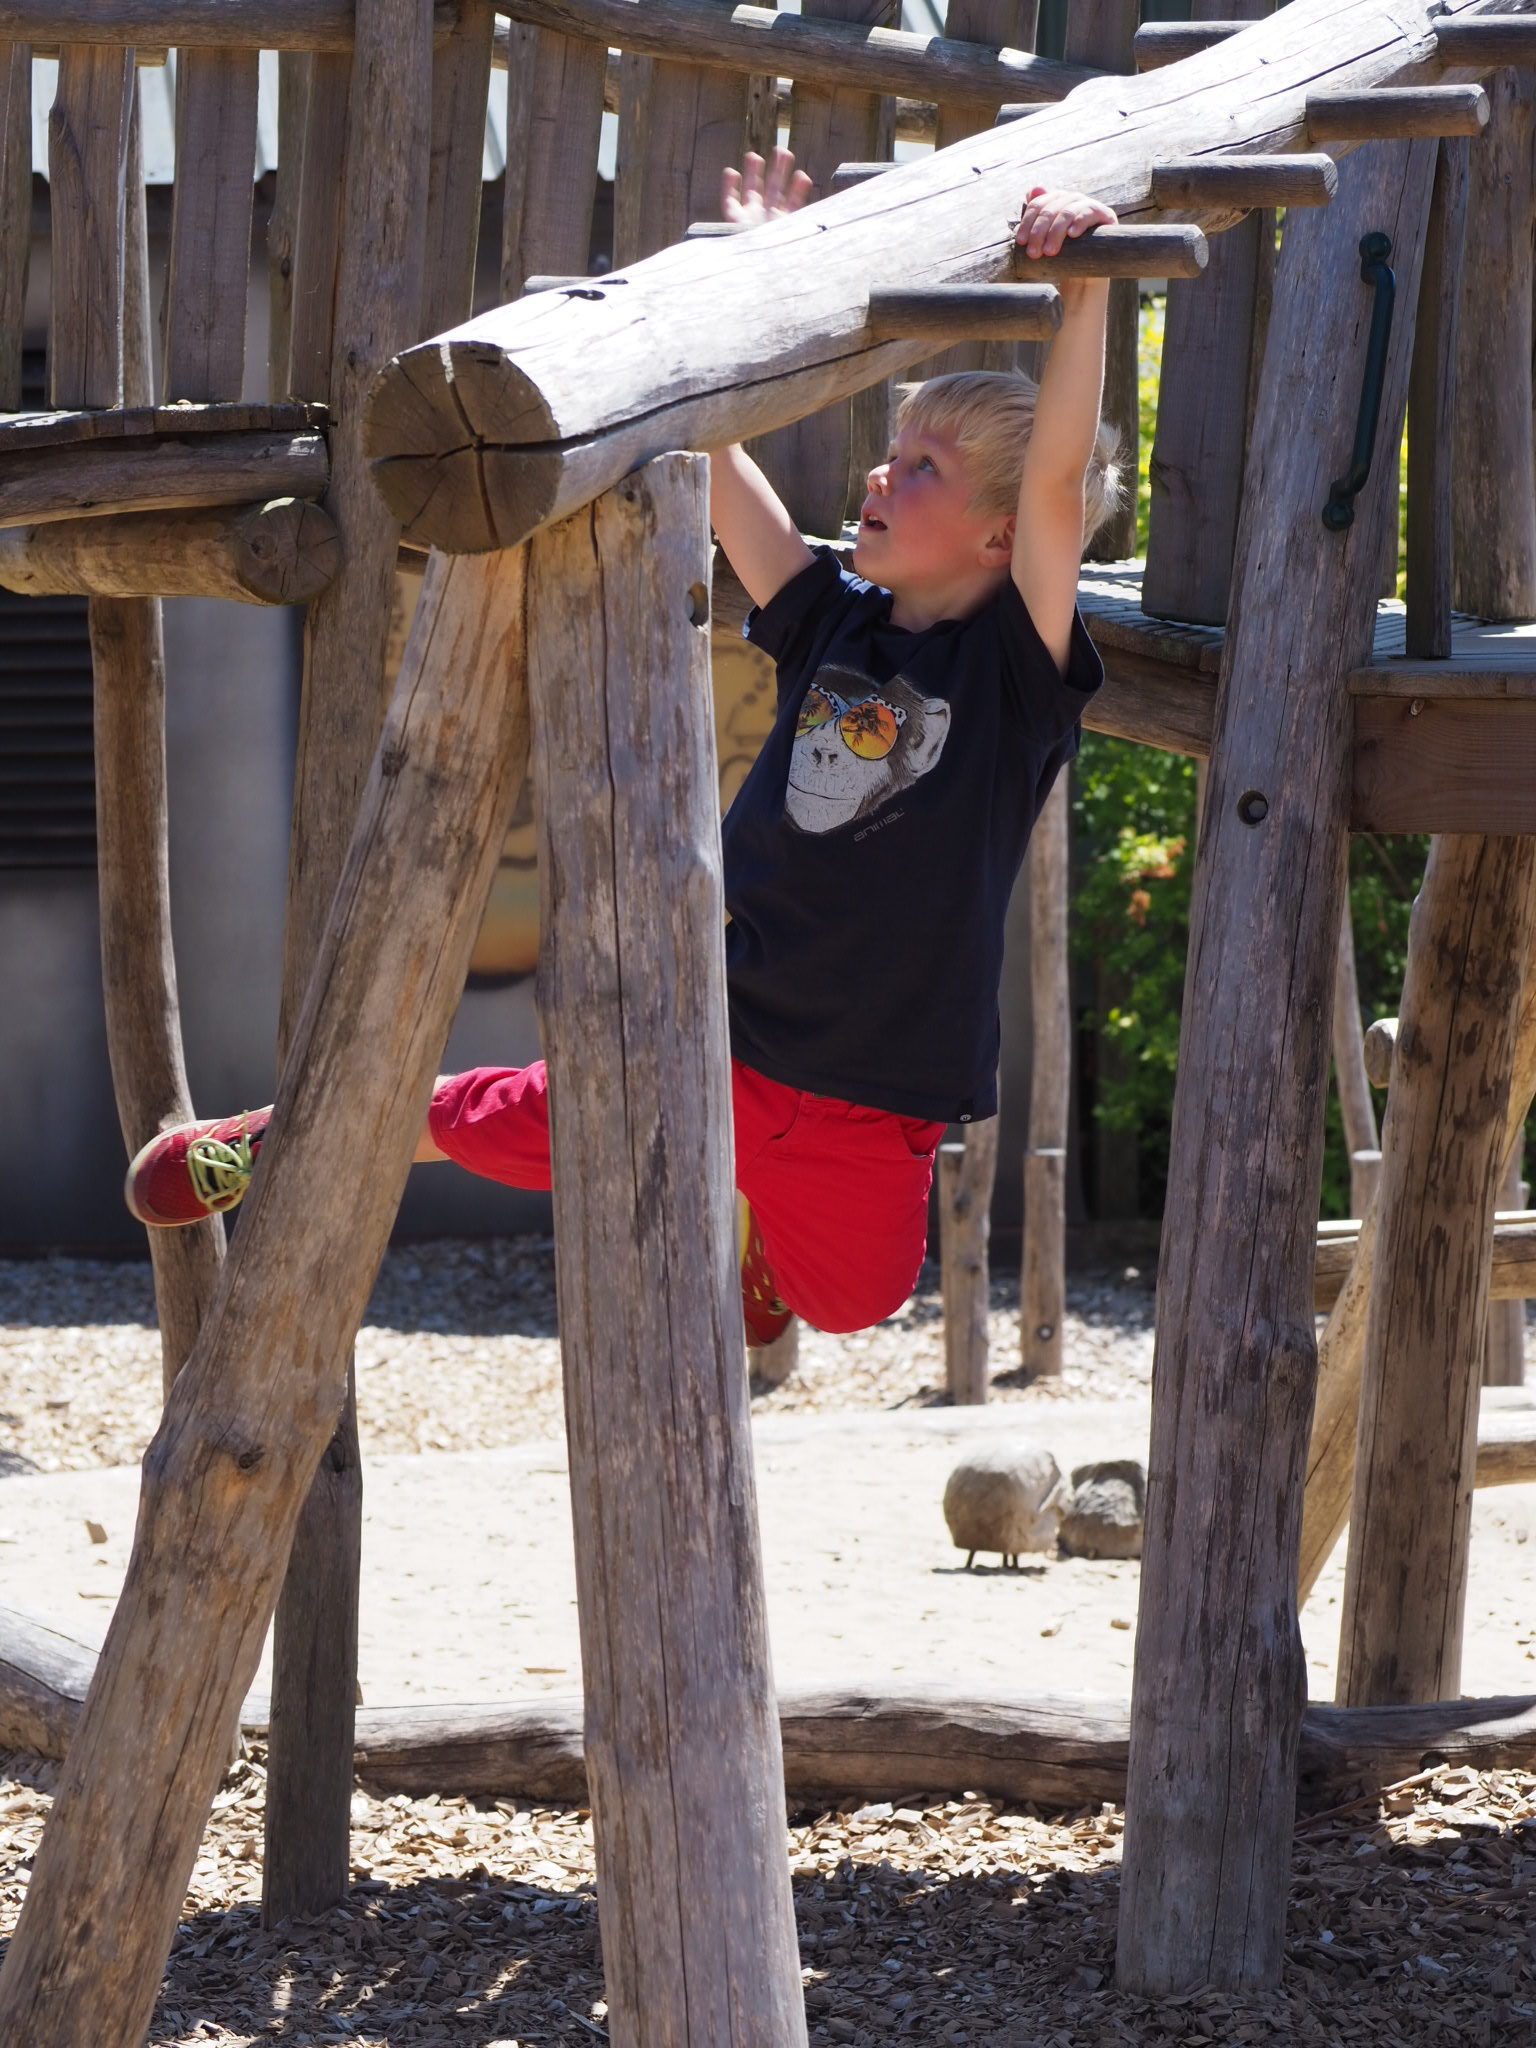 Boy swinging on pirate adventure playground